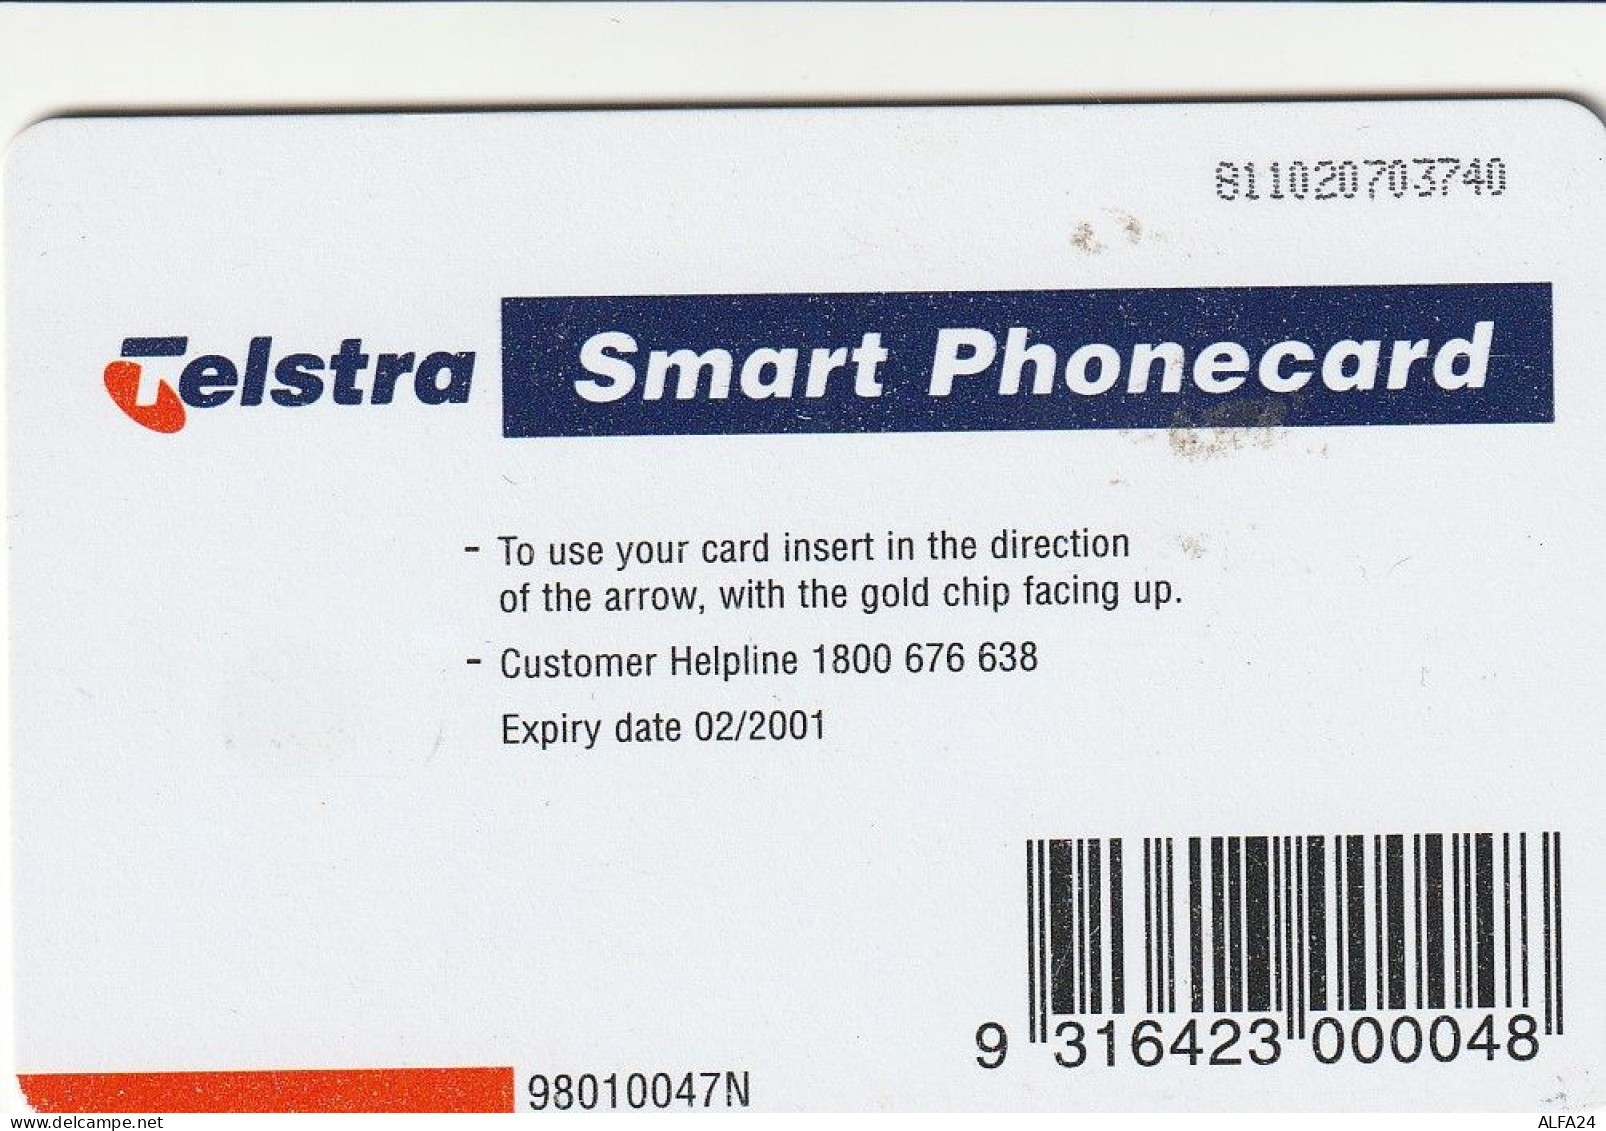 PHONE CARD AUSTRALIA  (CZ618 - Australie